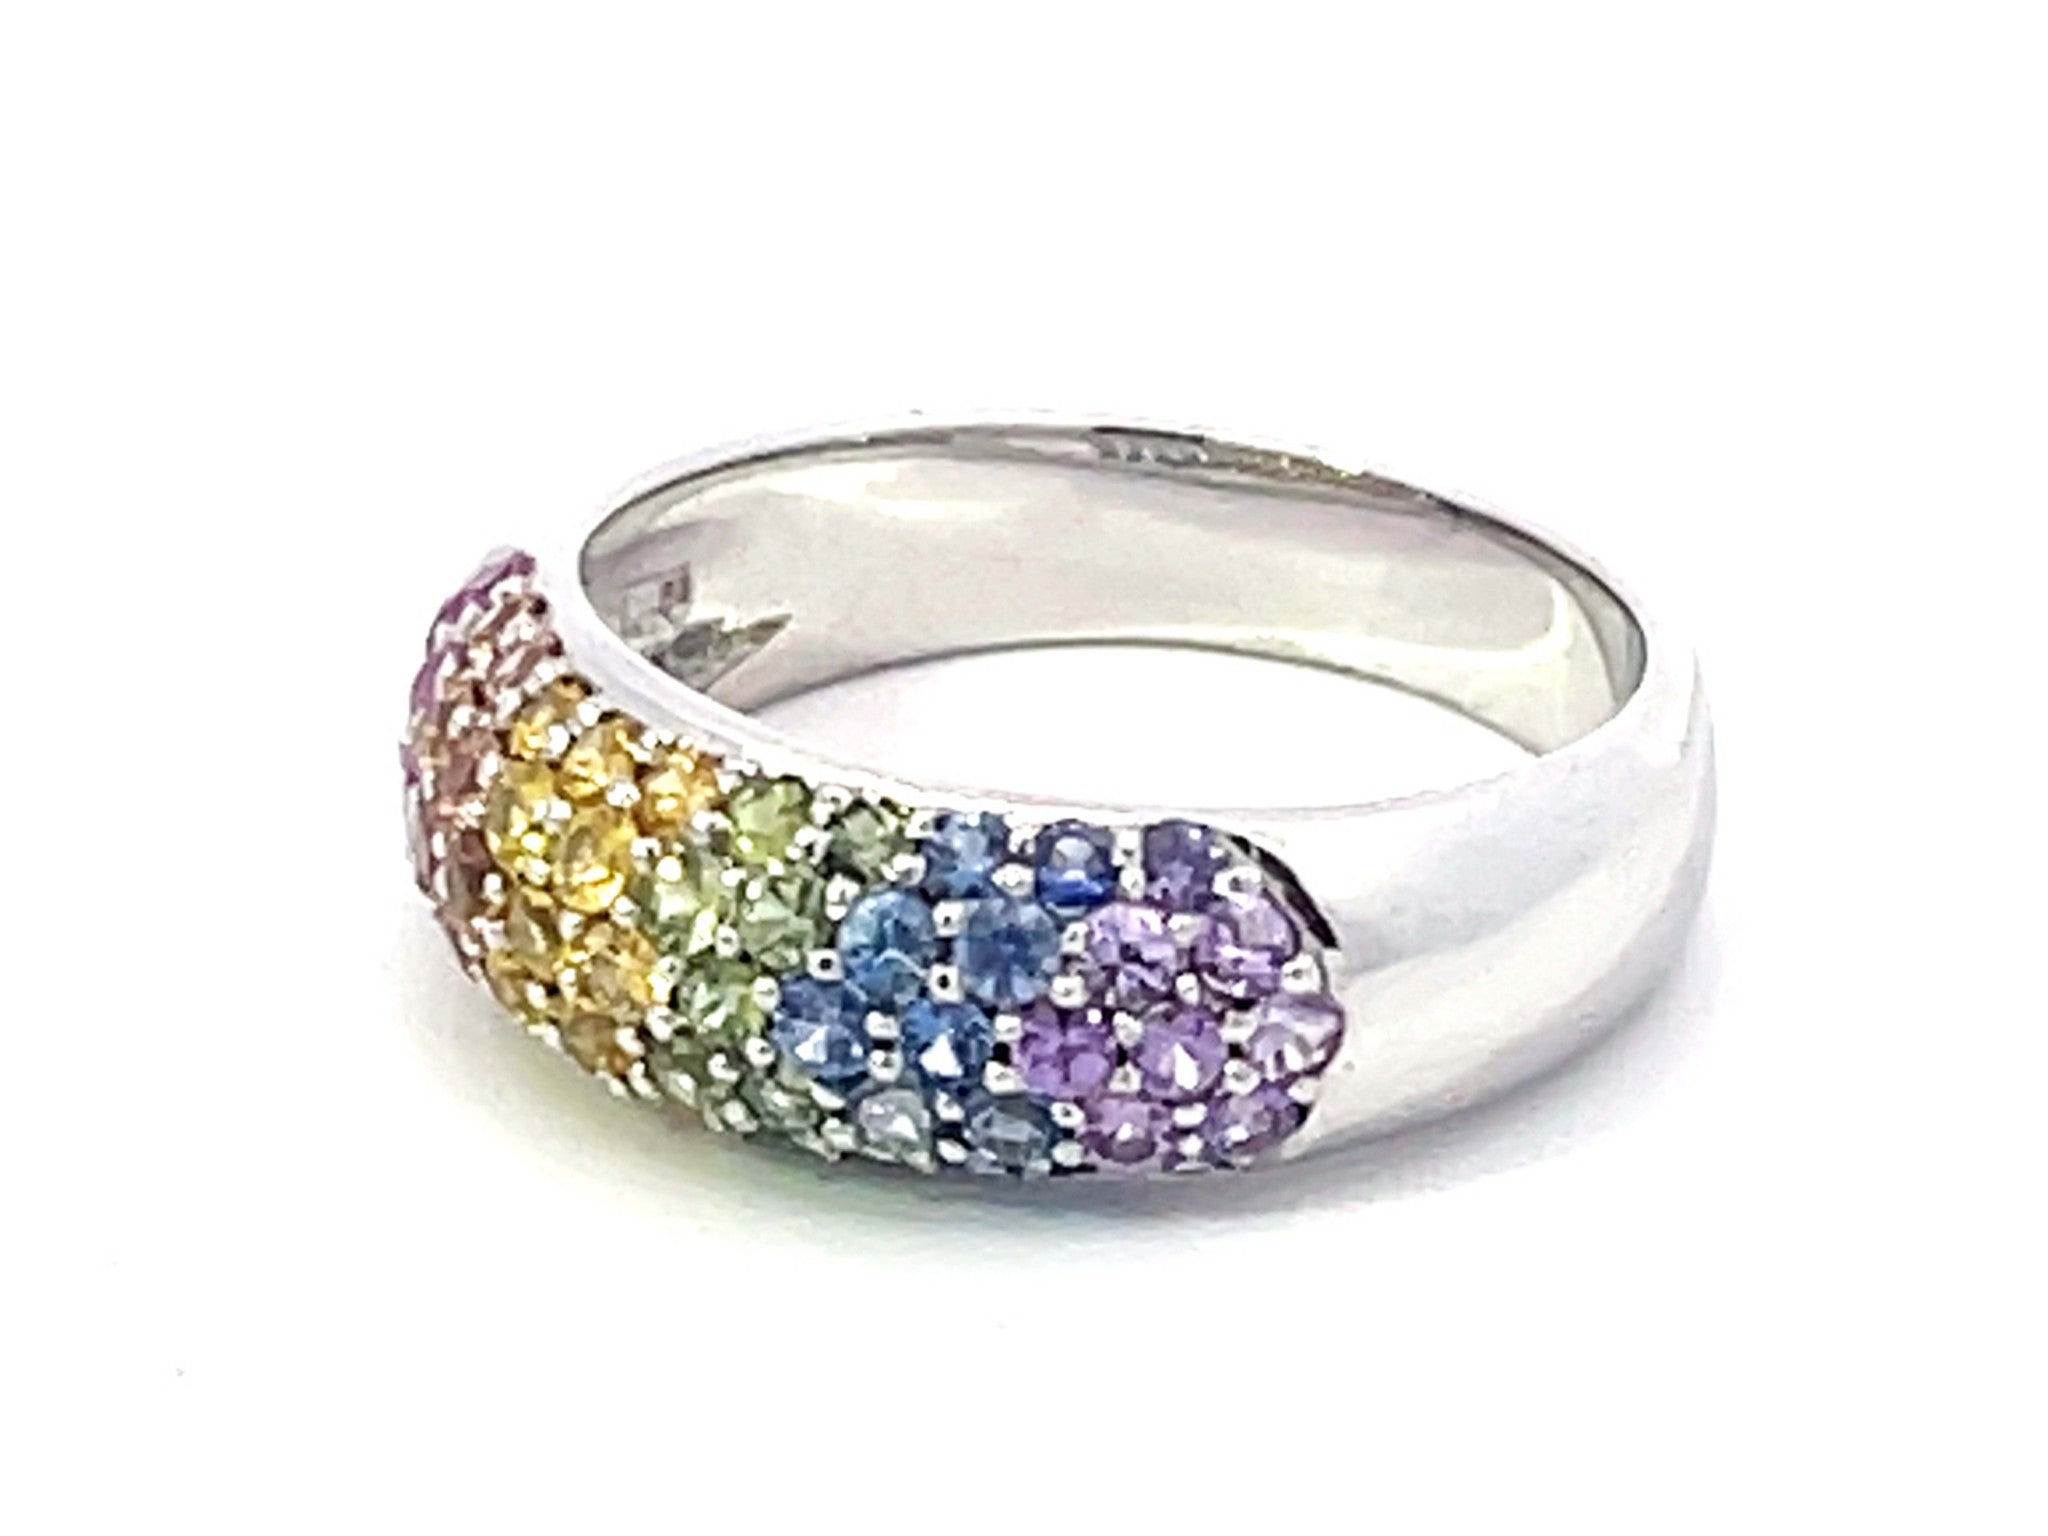 Multi Colored Sapphire Dome Ring in 18K White Gold